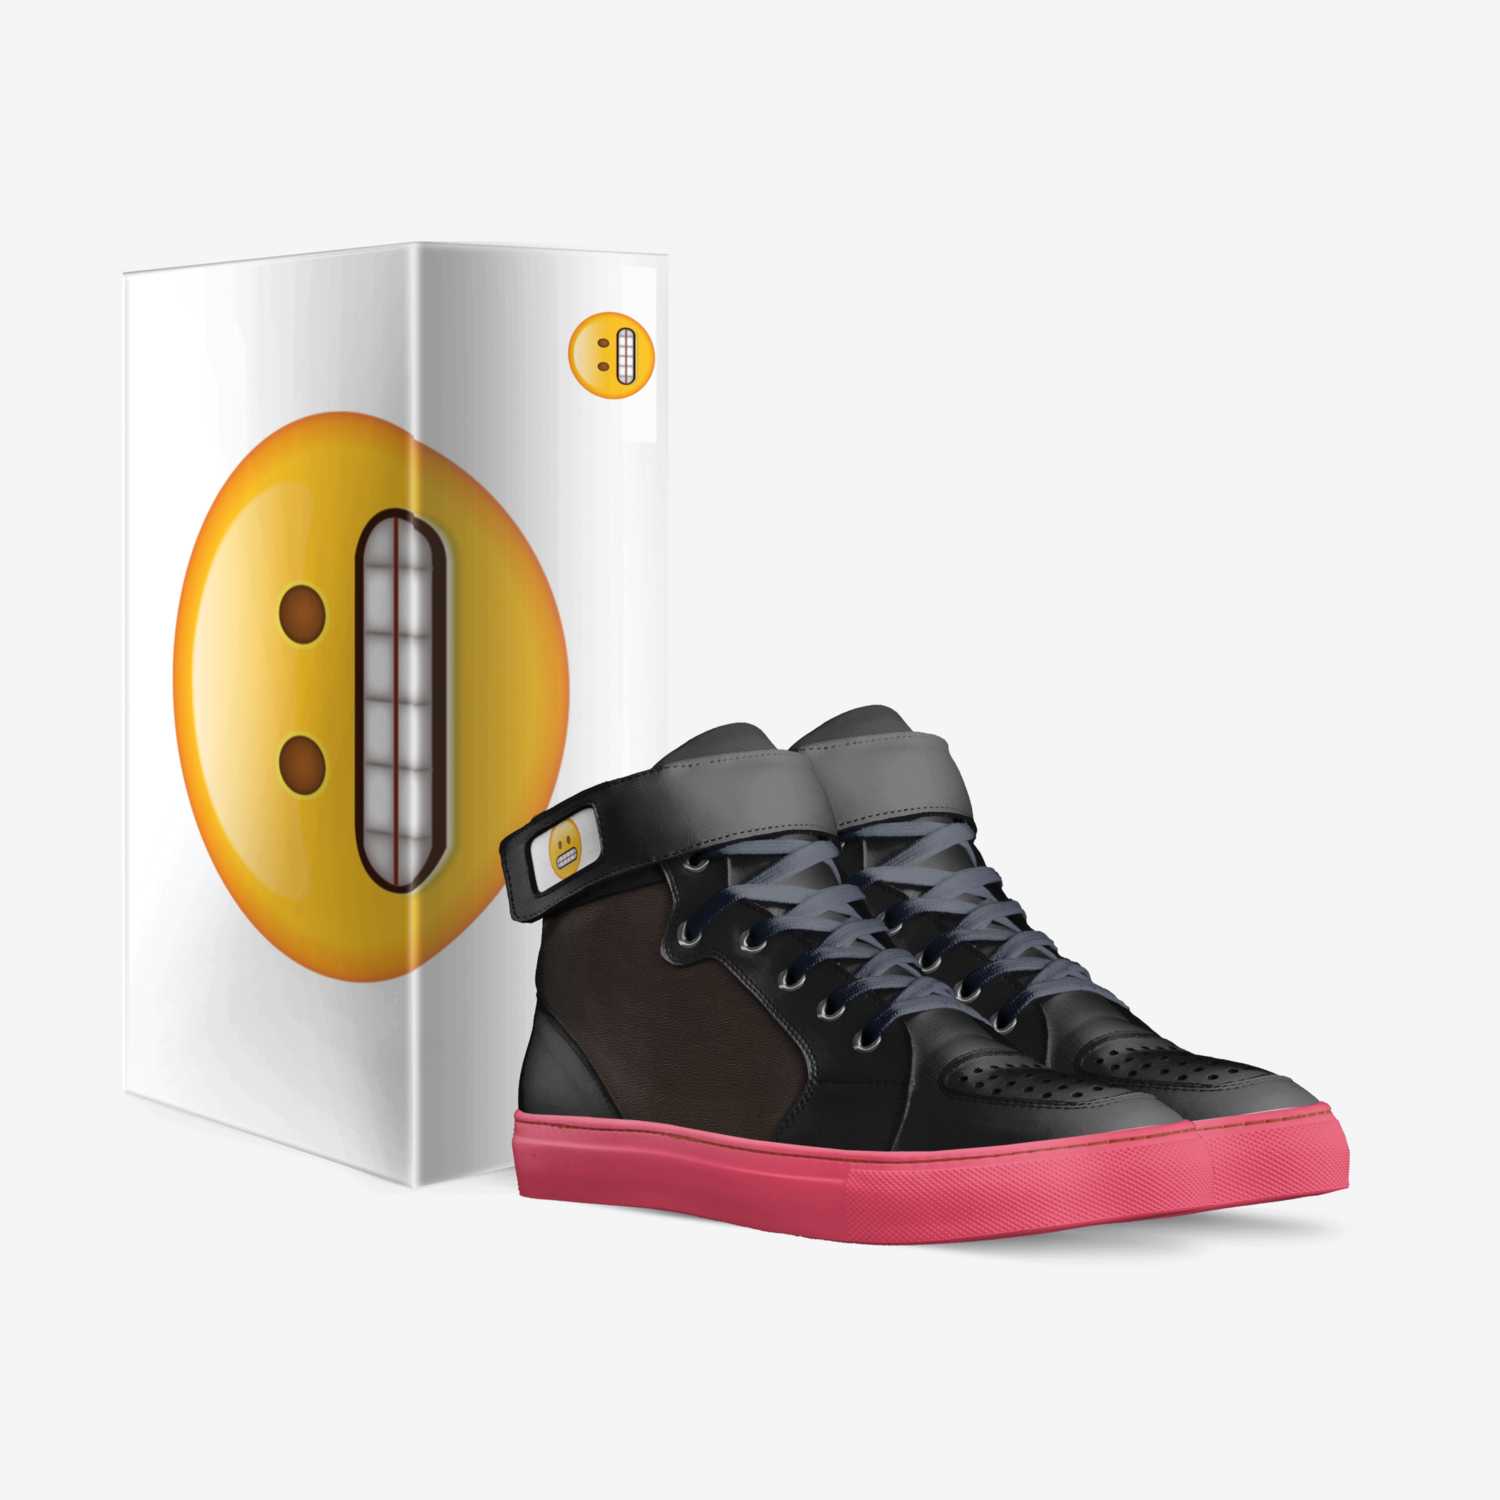 ikkkk custom made in Italy shoes by vanesa | Box view